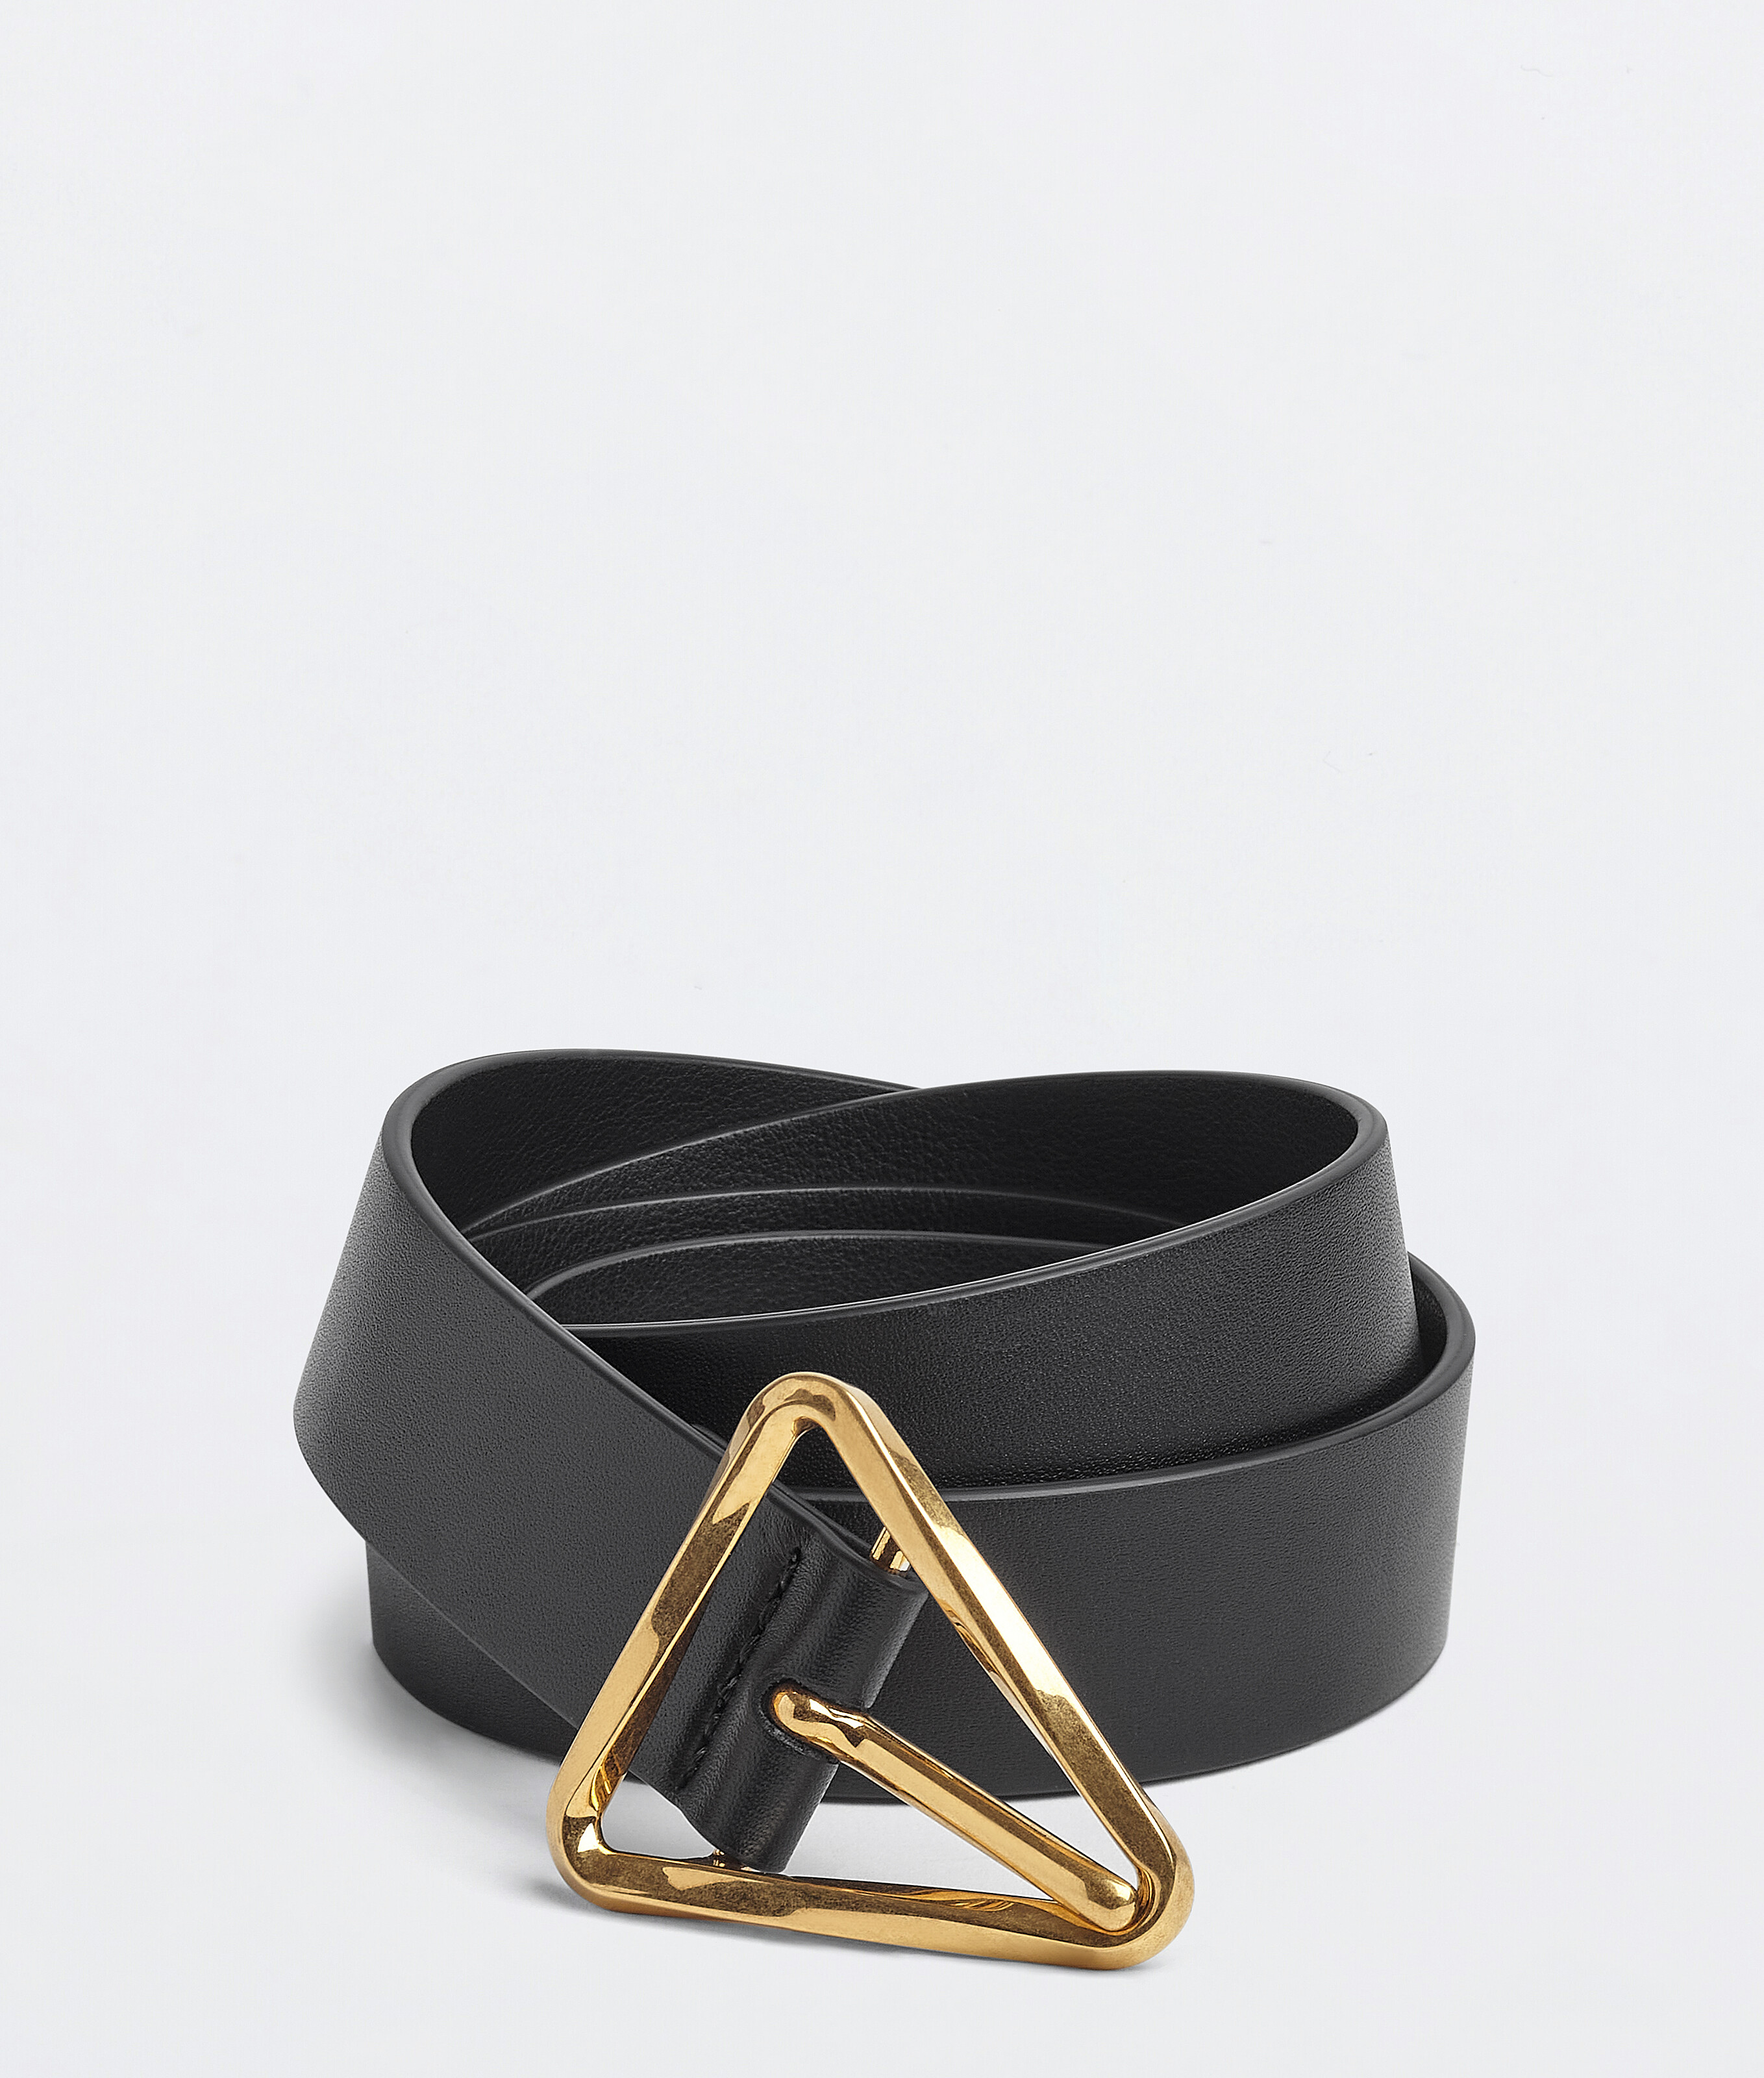 Black Womens Accessories Belts Bottega Veneta New Triangle Leather Belt in Black & Gold 